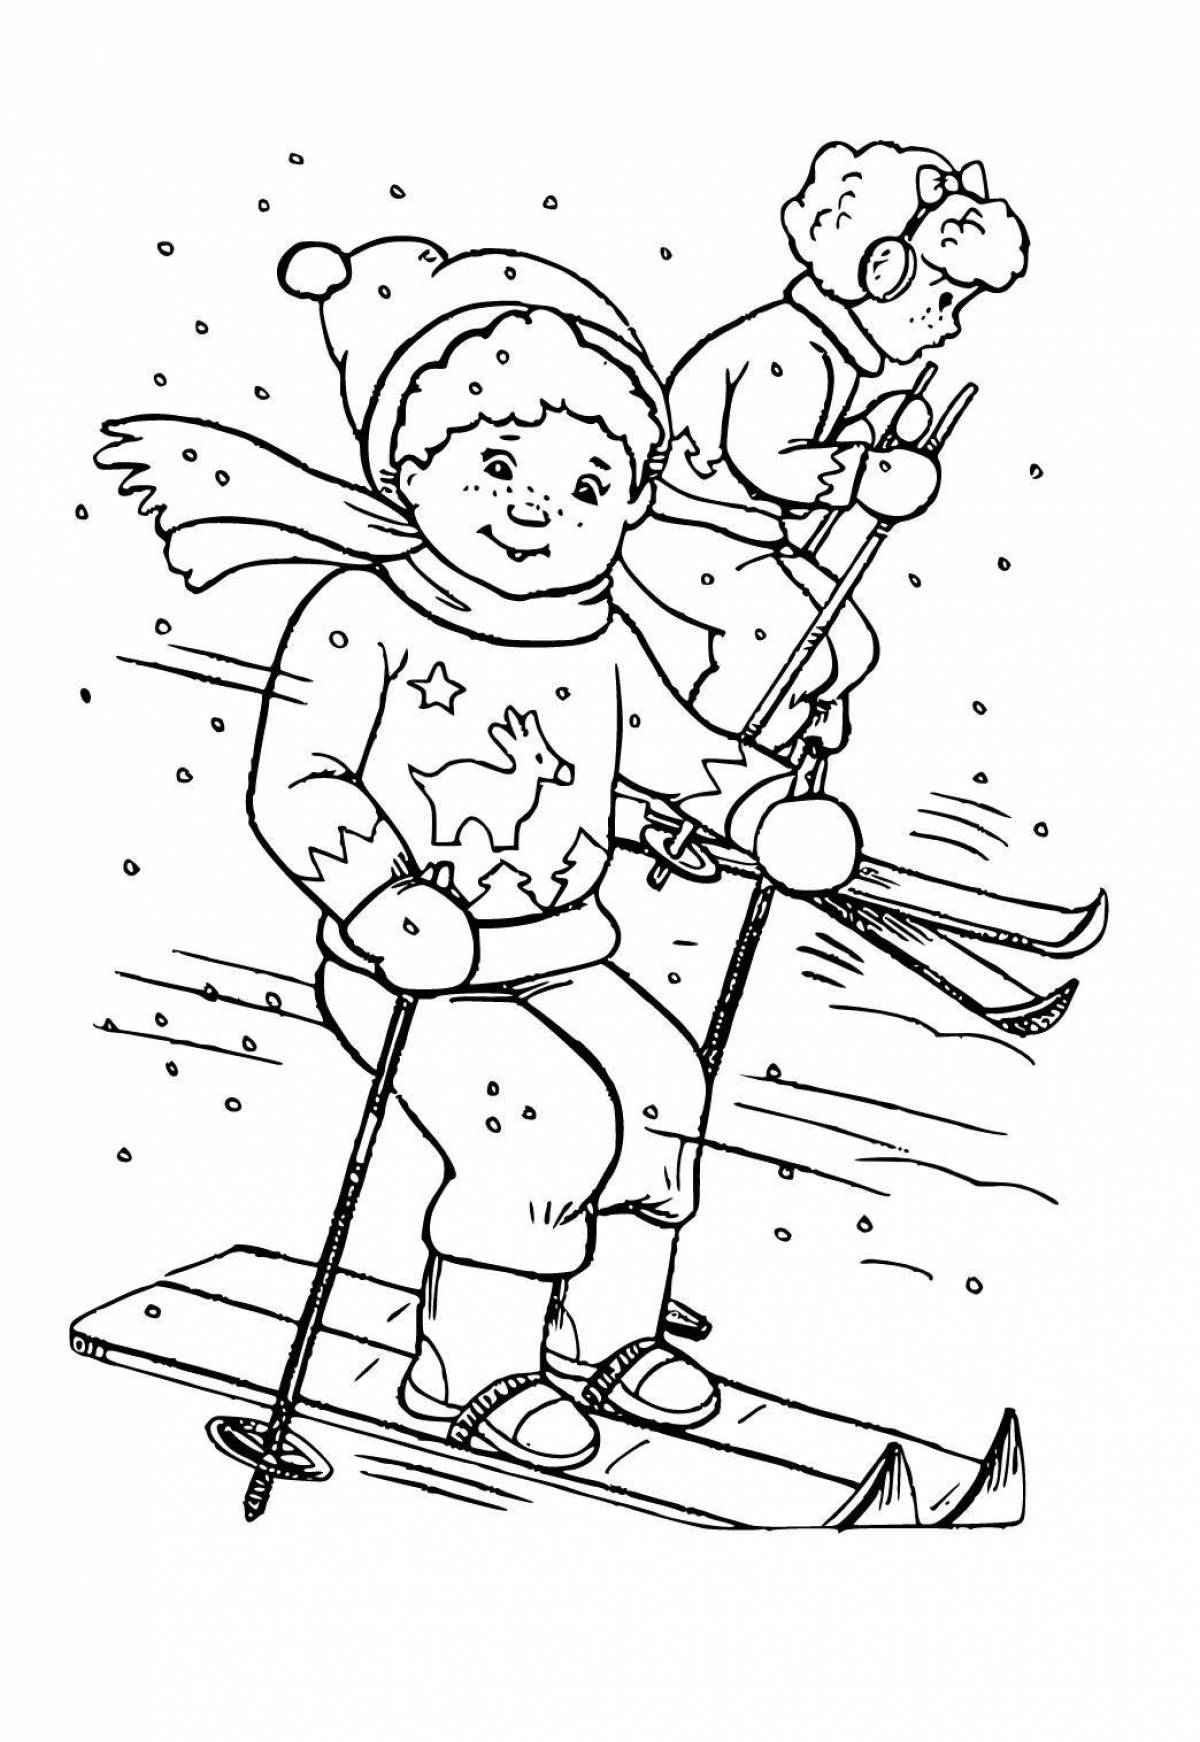 Skier for children 6 7 years old #4